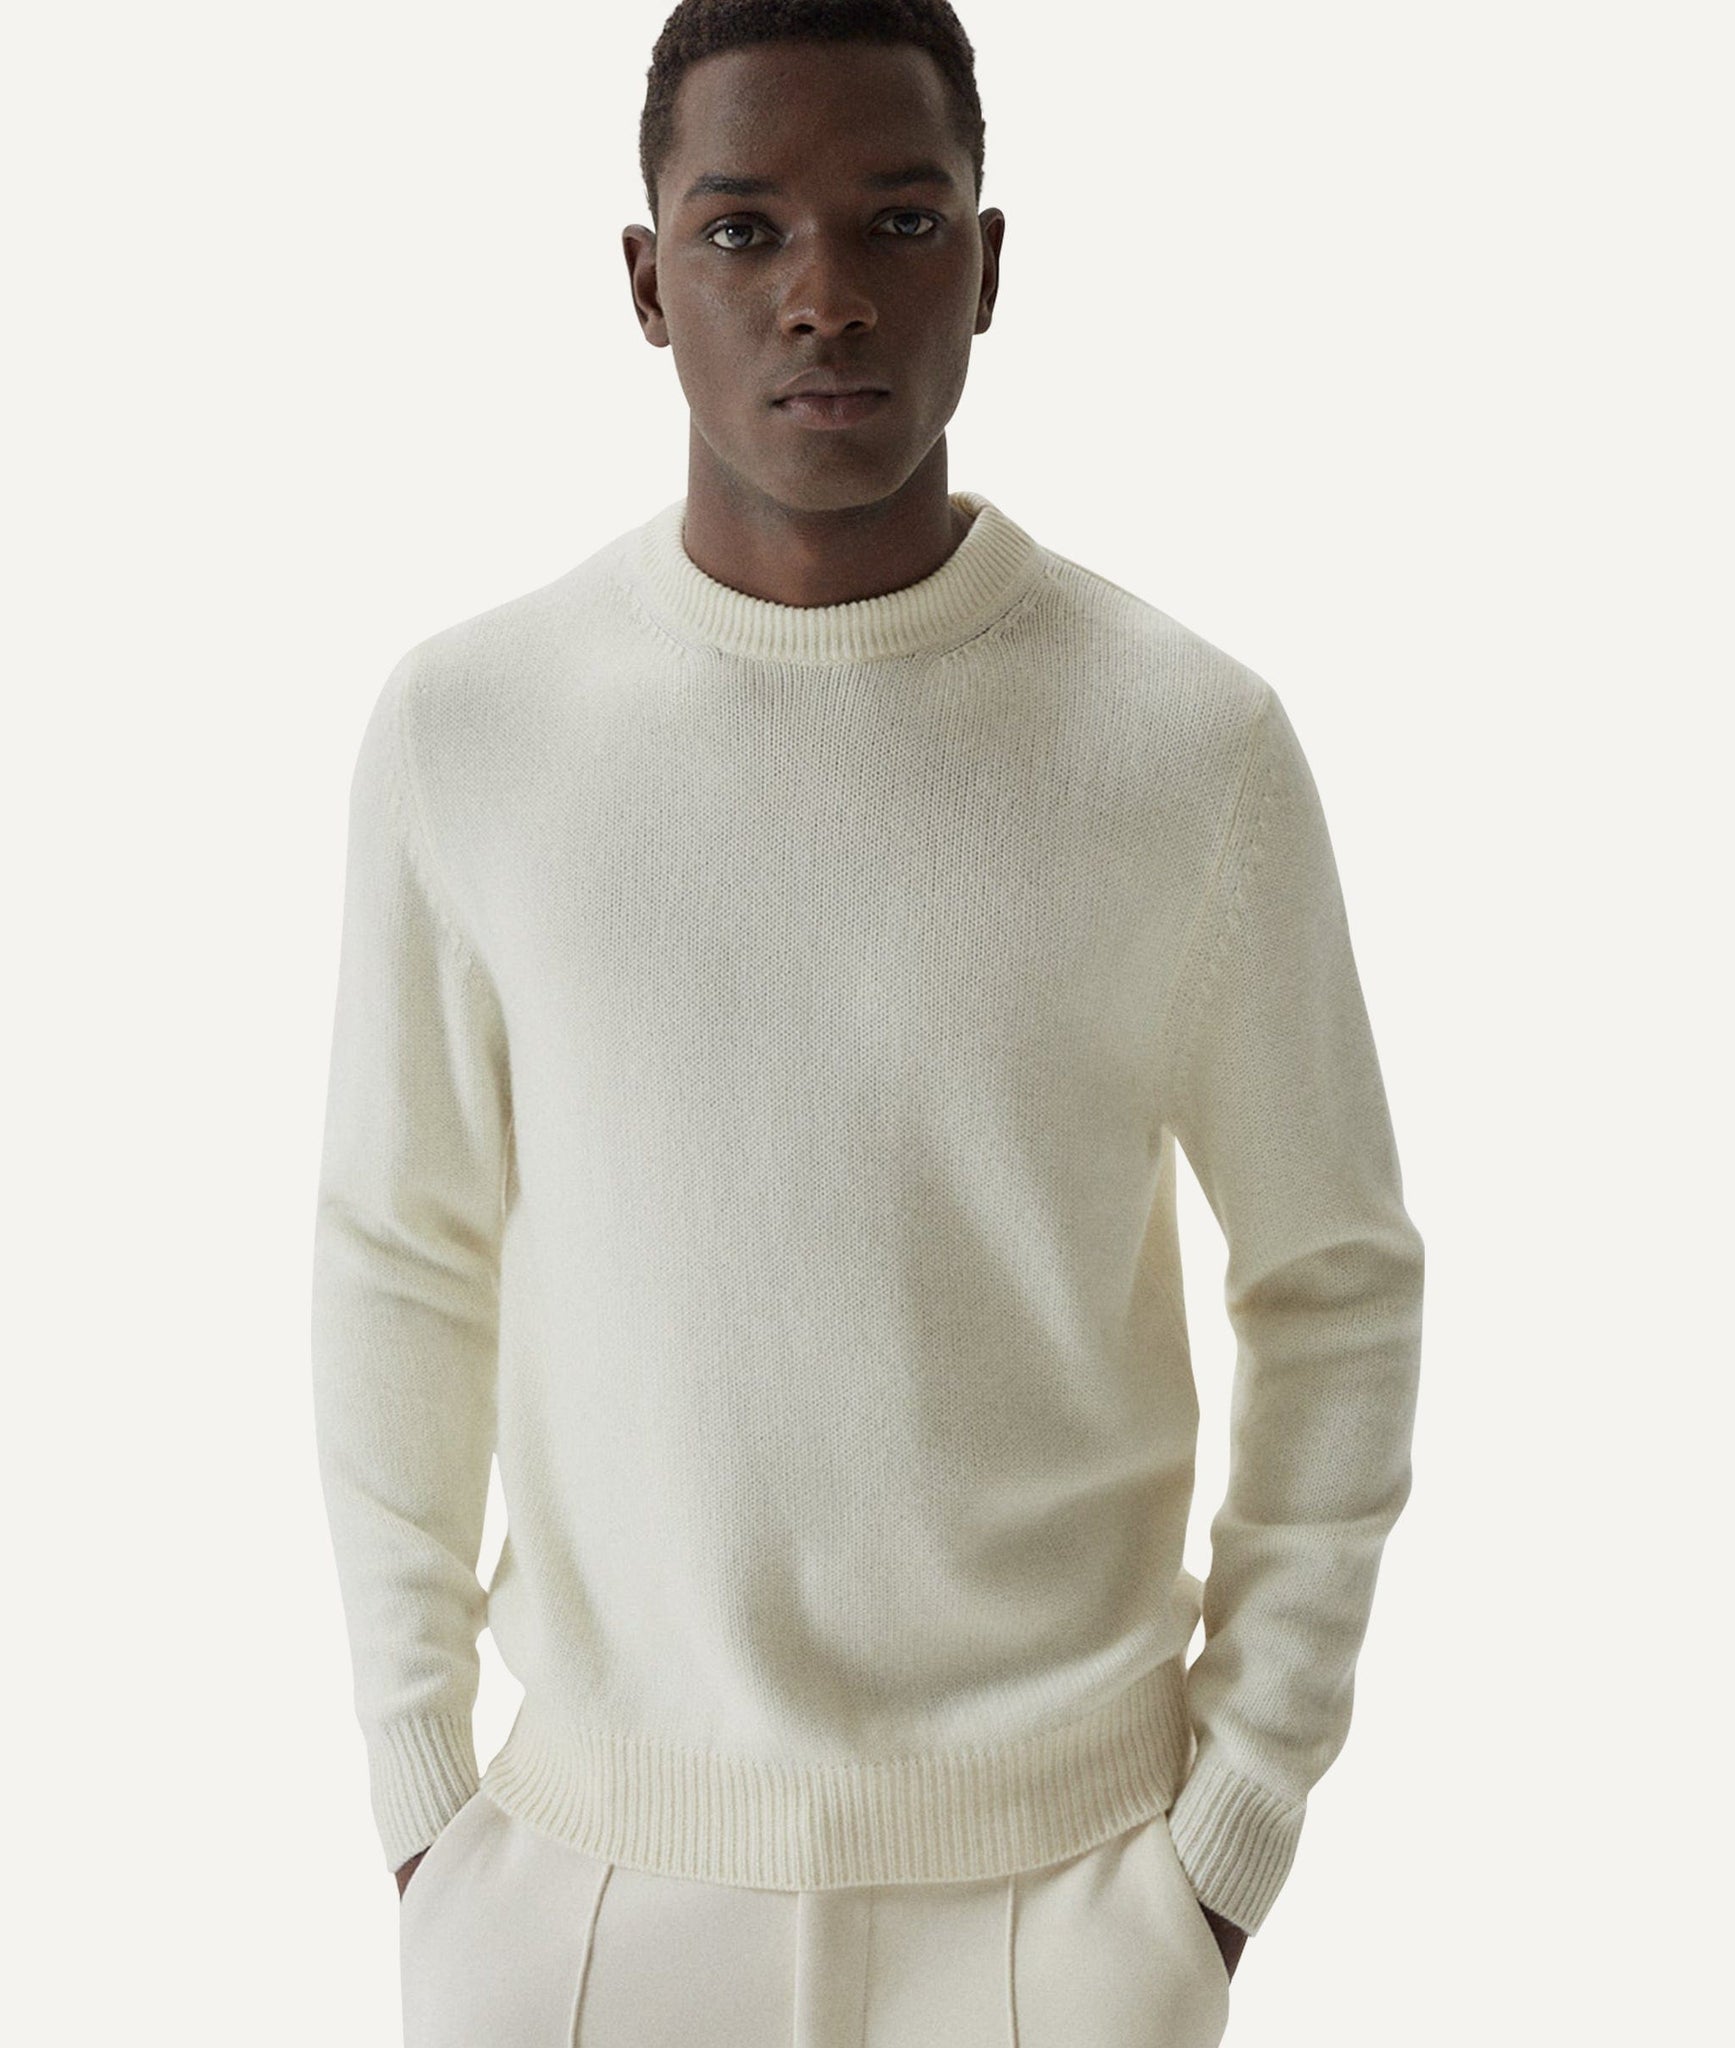 The Superior Cashmere Sweater